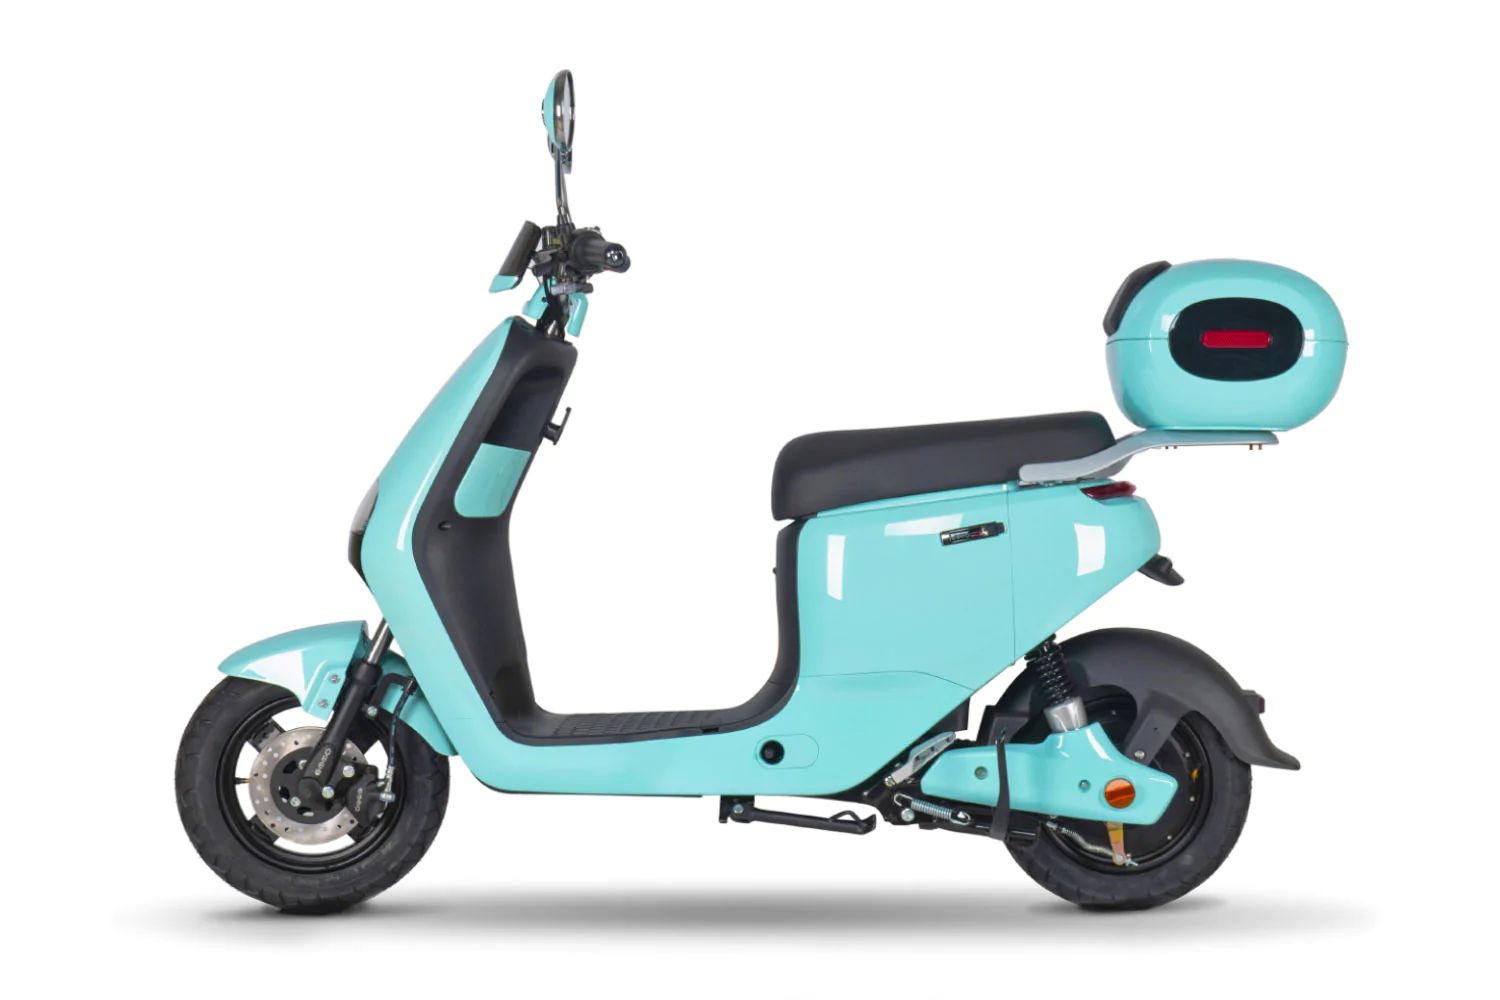 Emmo ADO scooter-style ebike